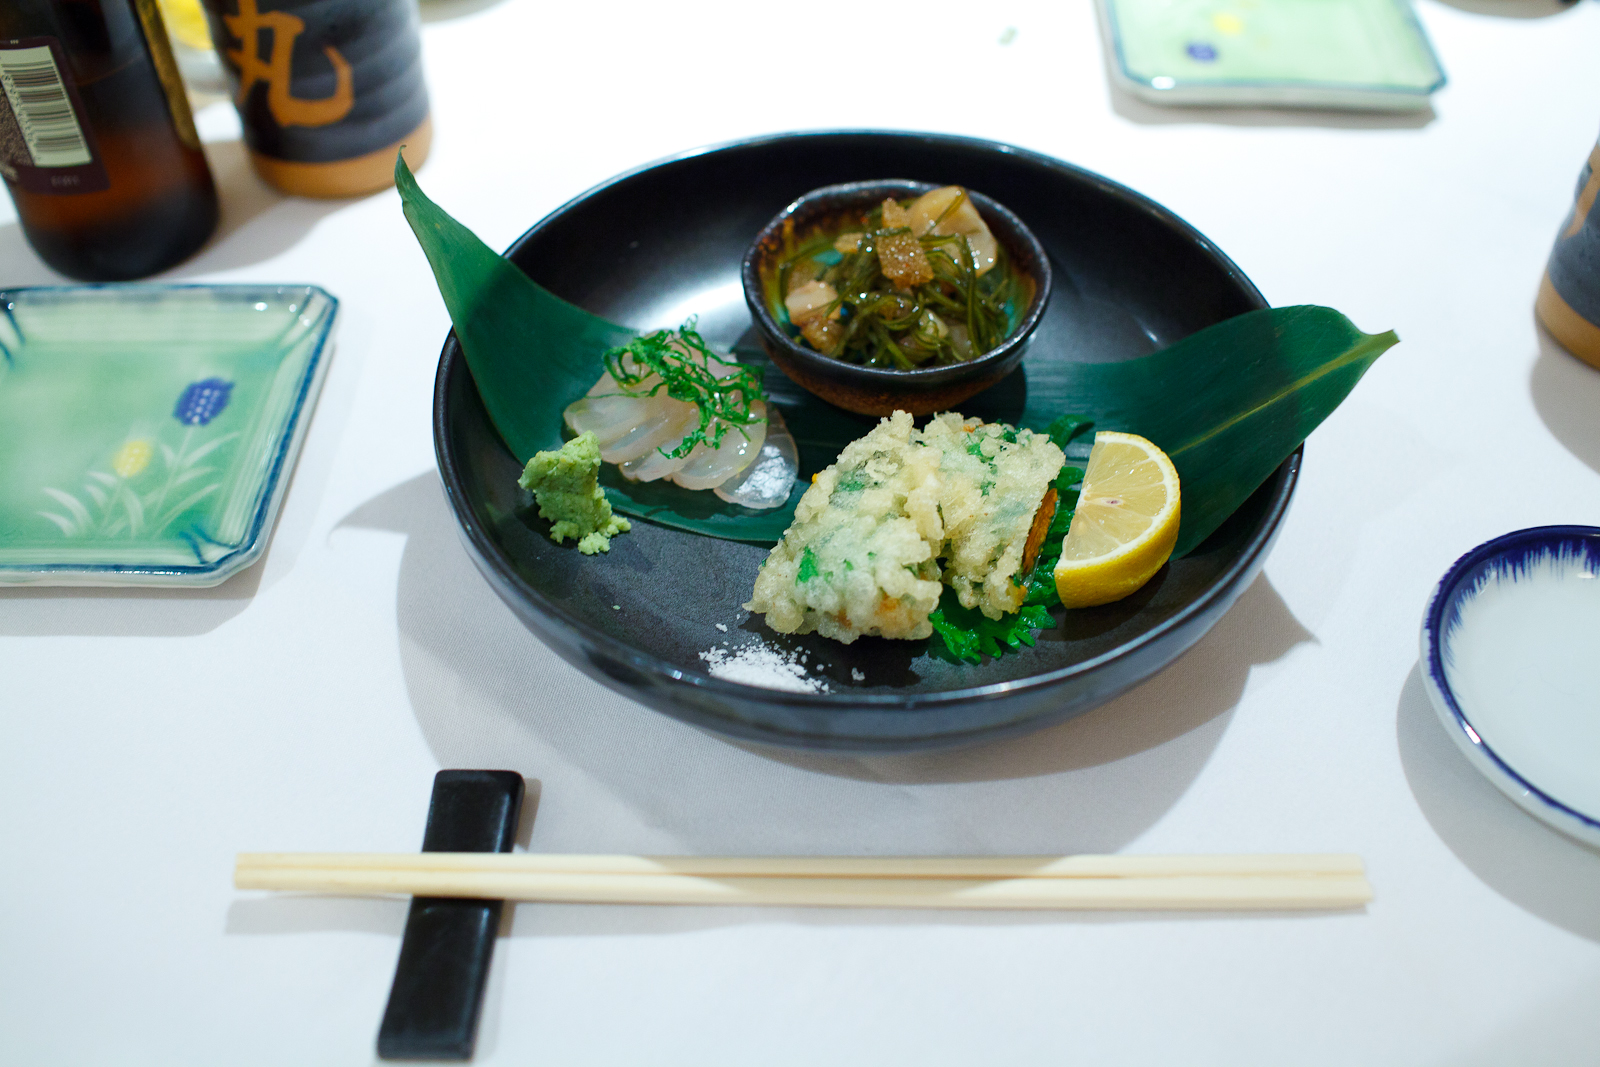 Kelp cured medai, squid, herring roe, seaweed marinated with soy sauce, sea urchin wrapped in shiso tempura ($12)